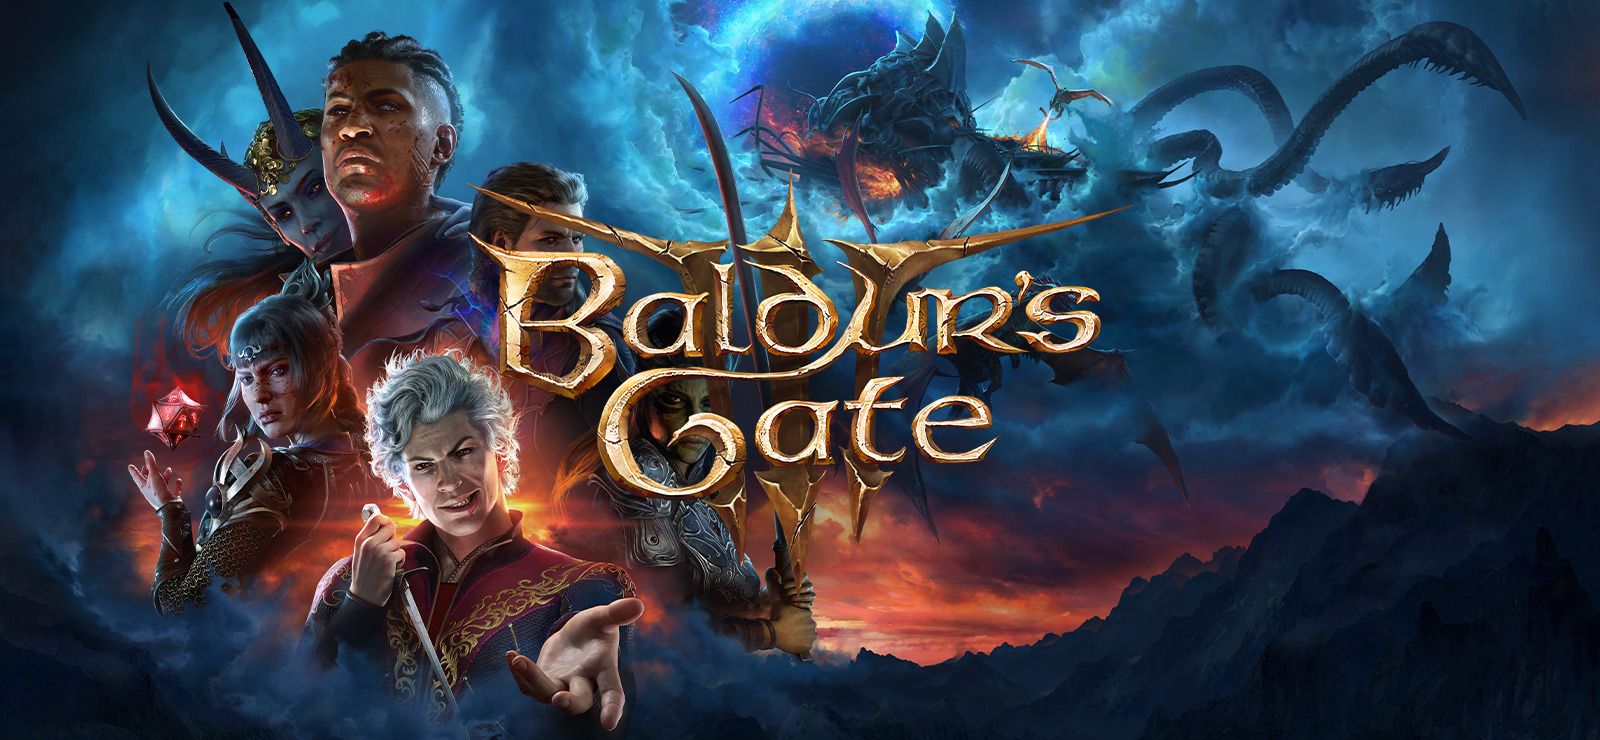 Baldur's Gate 3 больше не лучшая игра на Opencritic и Metacritic